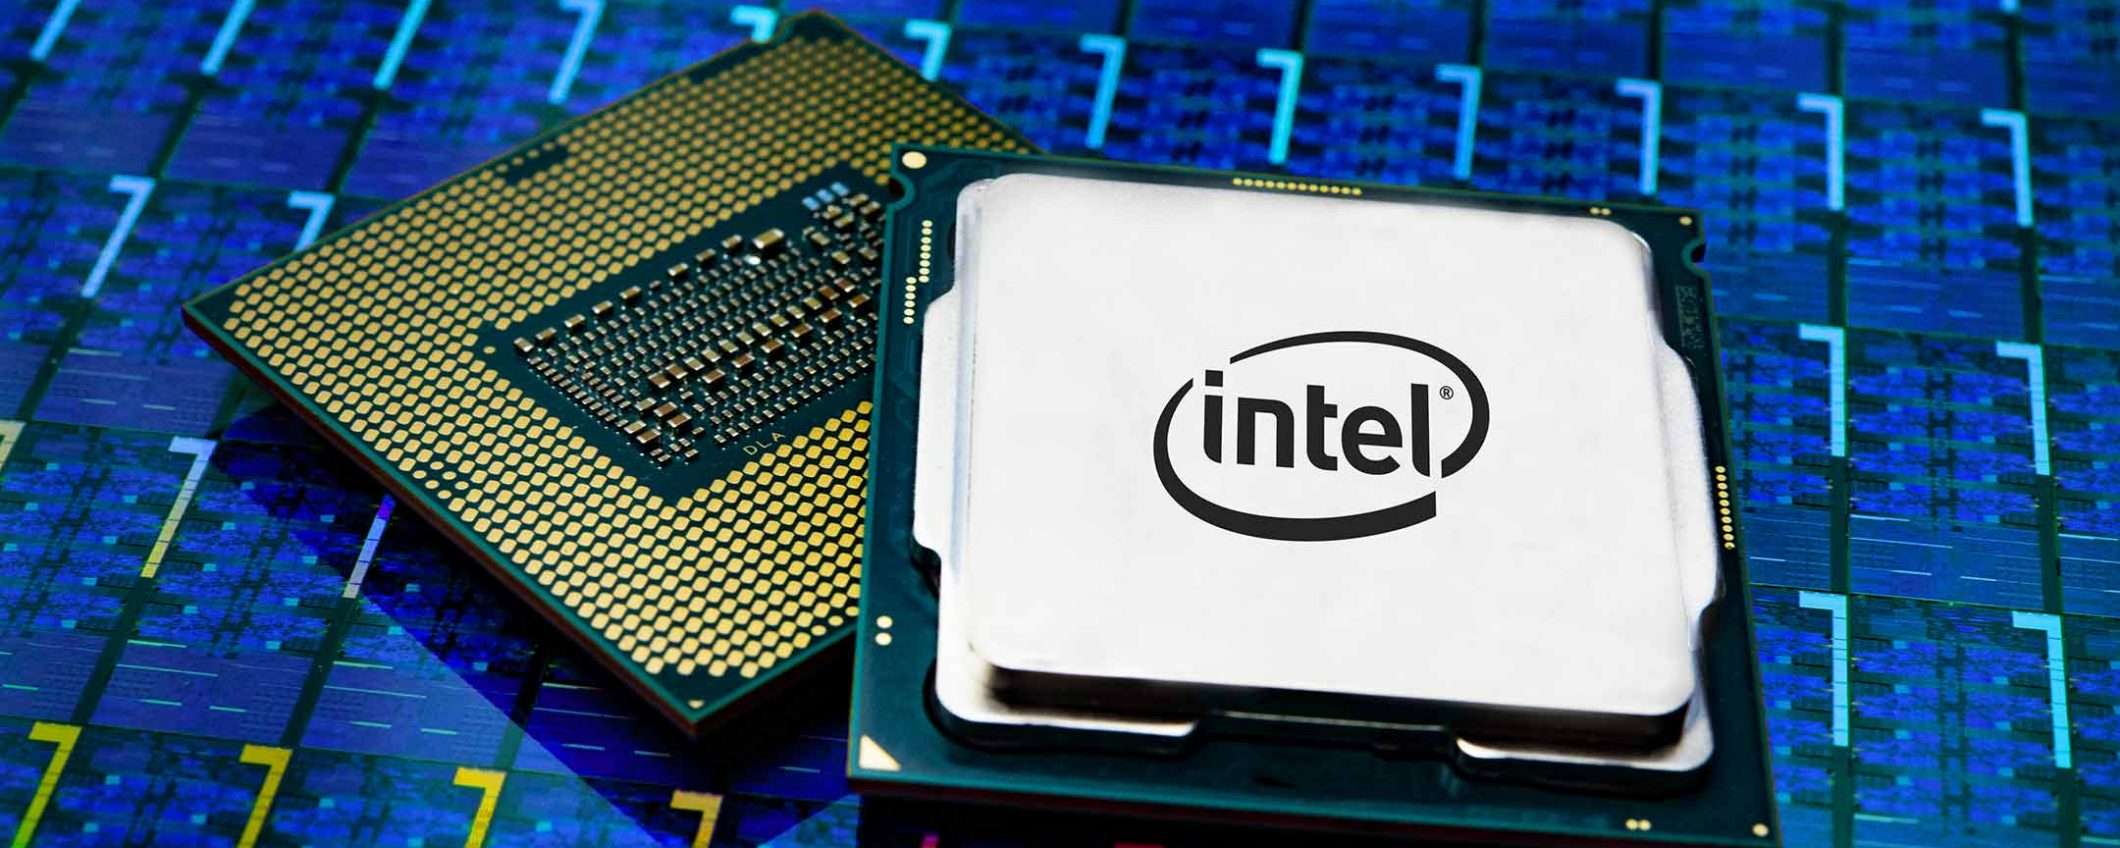 CPU Intel: overclock con Performance Maximizer